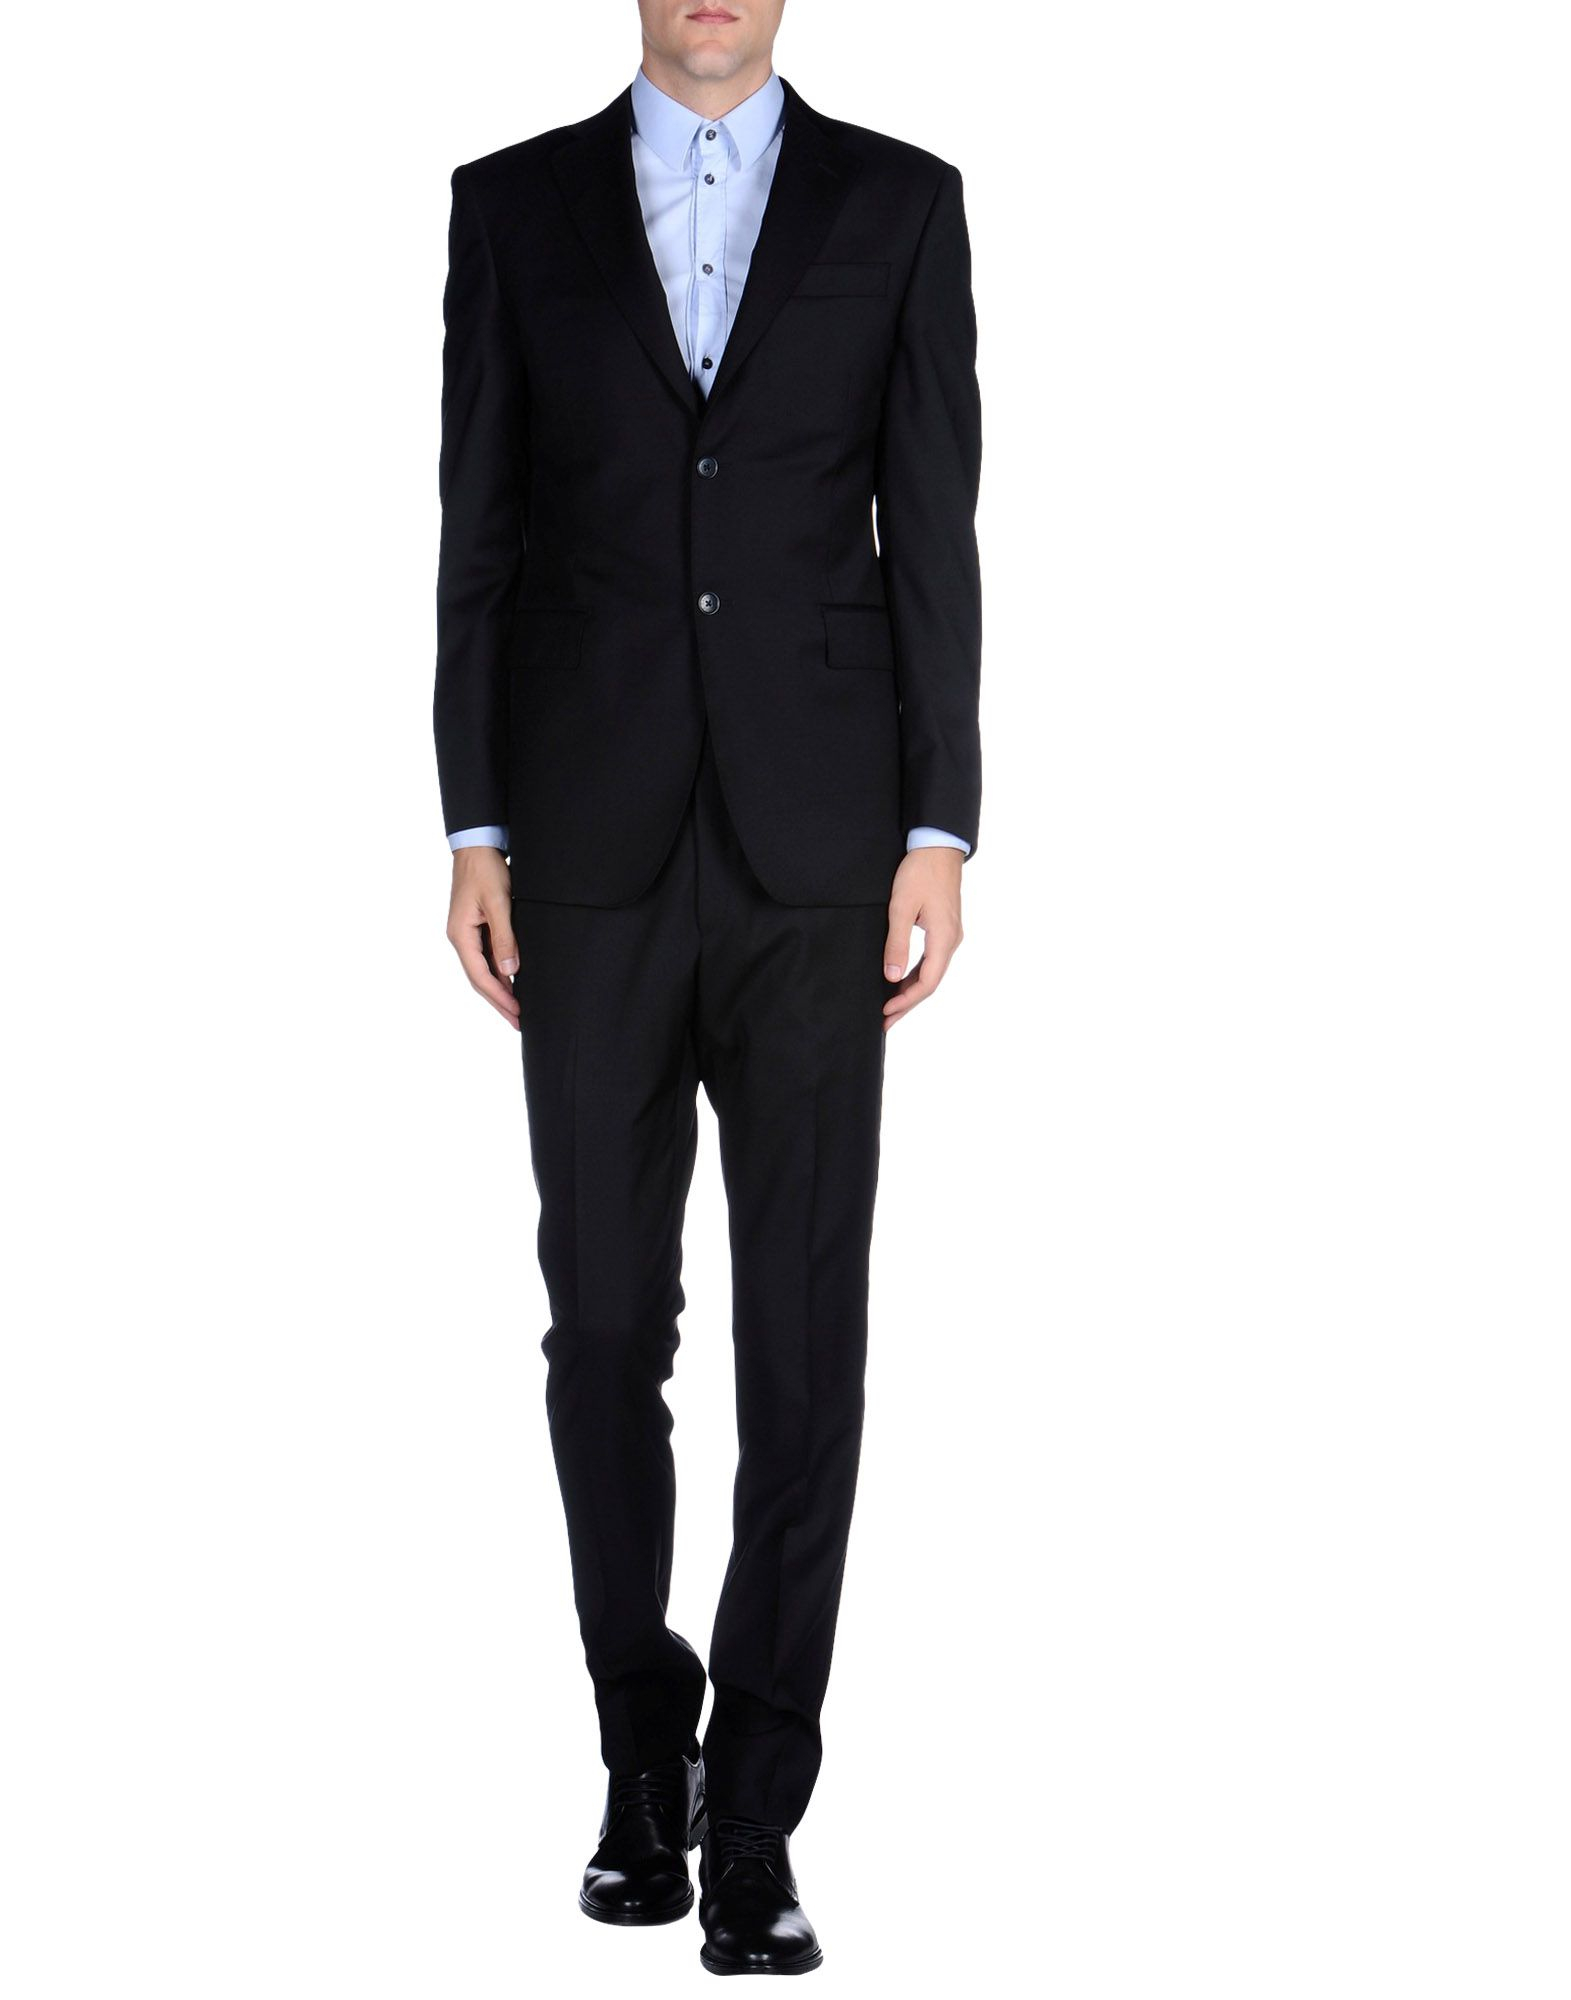 Balmain Suit in Black for Men - Lyst